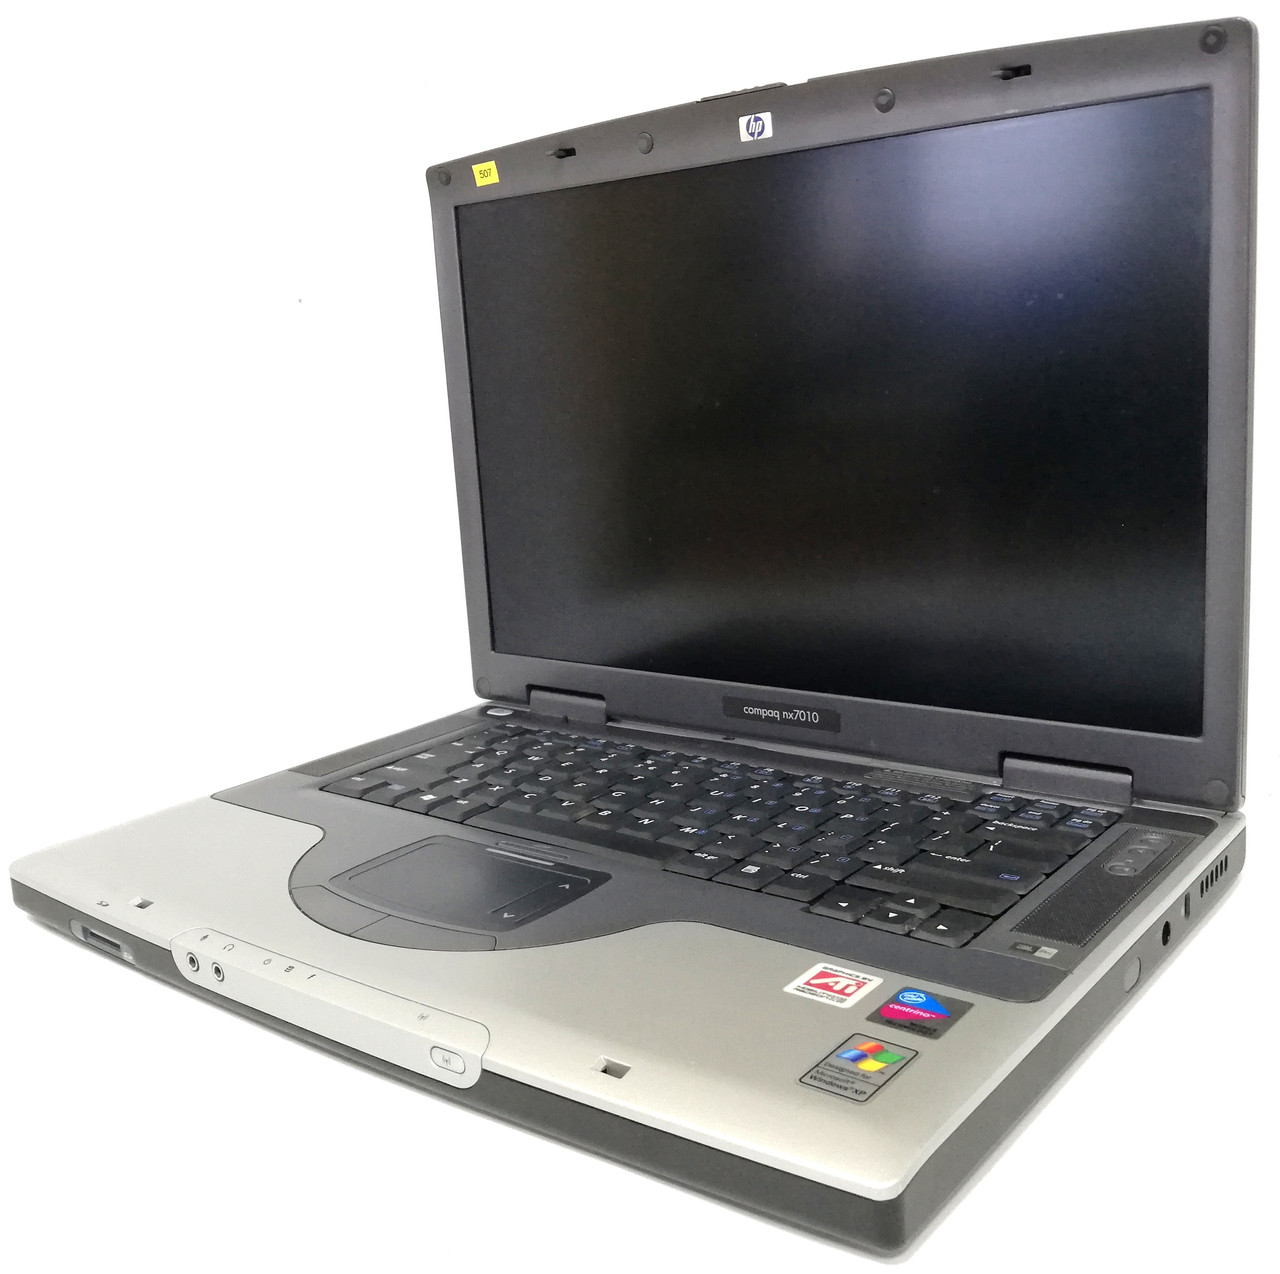 Ноутбук HP Compaq NX7010 15.4" Intel Pentium M 735 1,6 ГГц 512 МБ Б/У